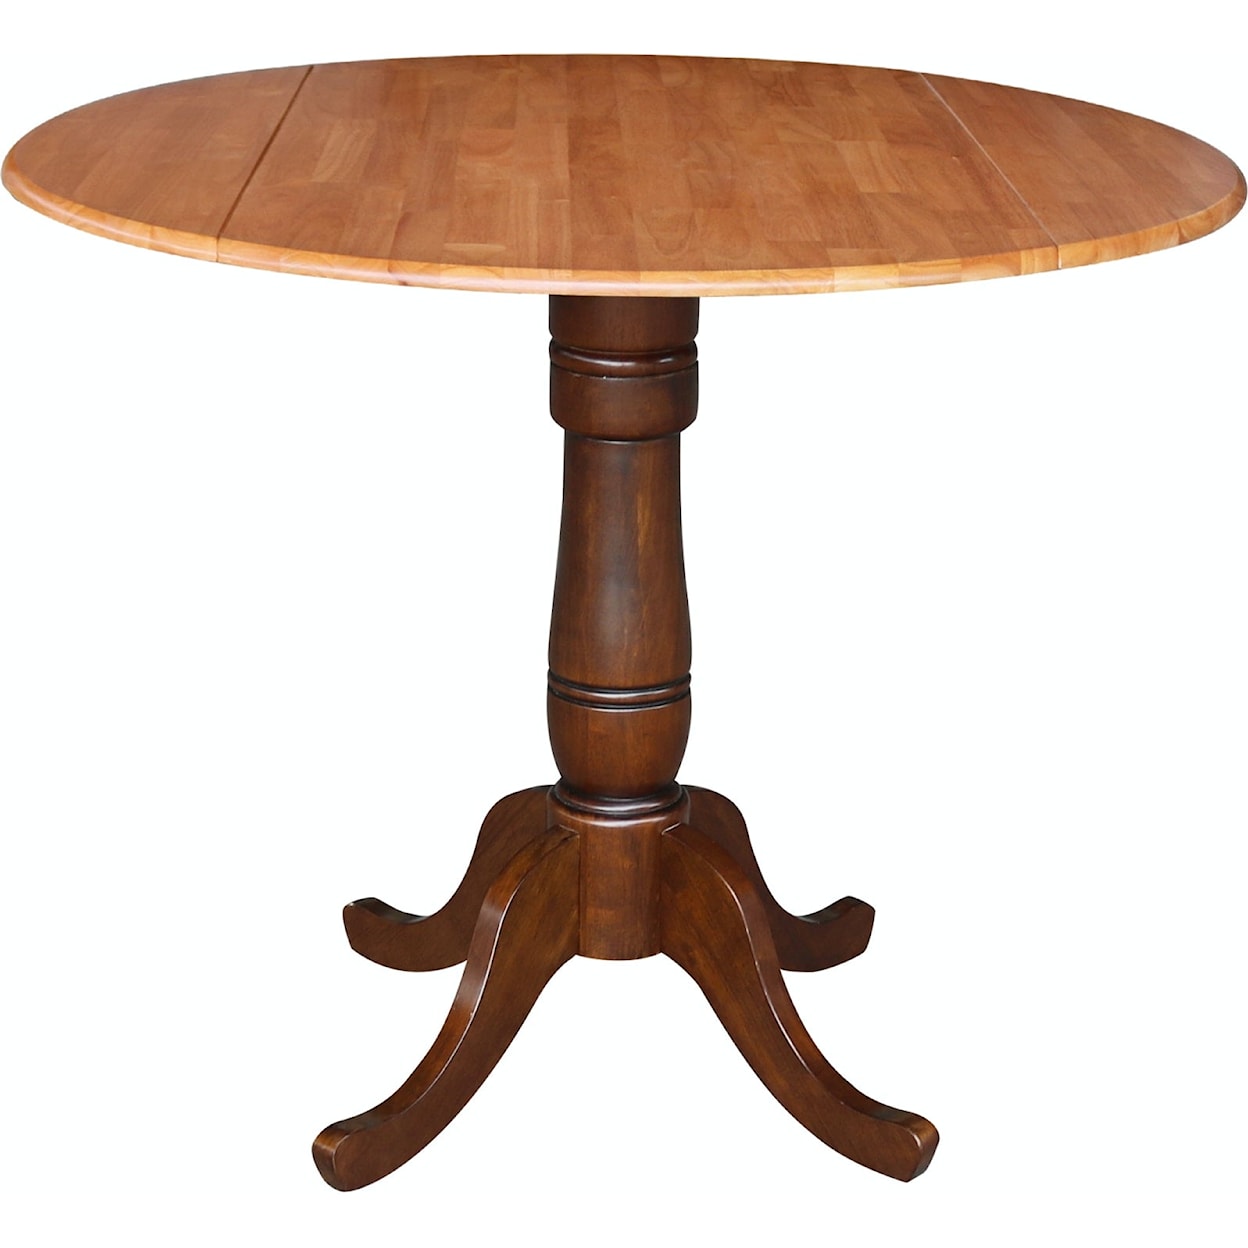 John Thomas Dining Essentials Pedestal Table in Cinnamon / Espresso